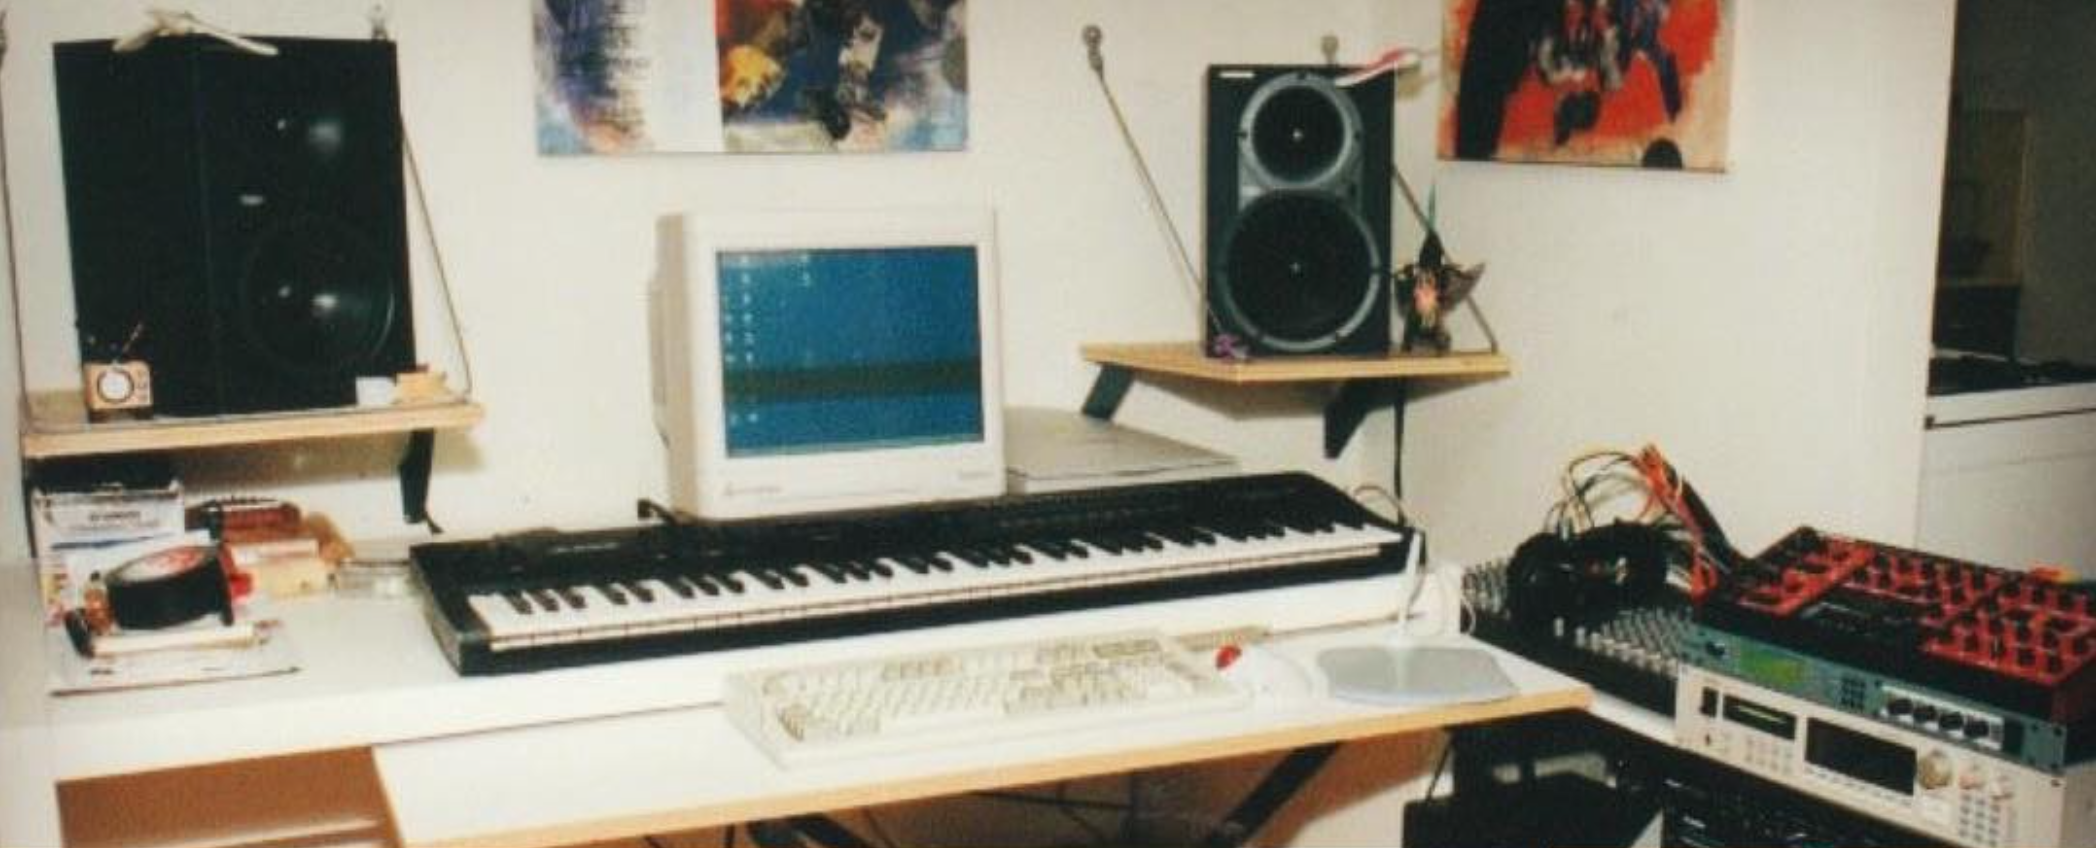 My little home studio, Virus on the right.